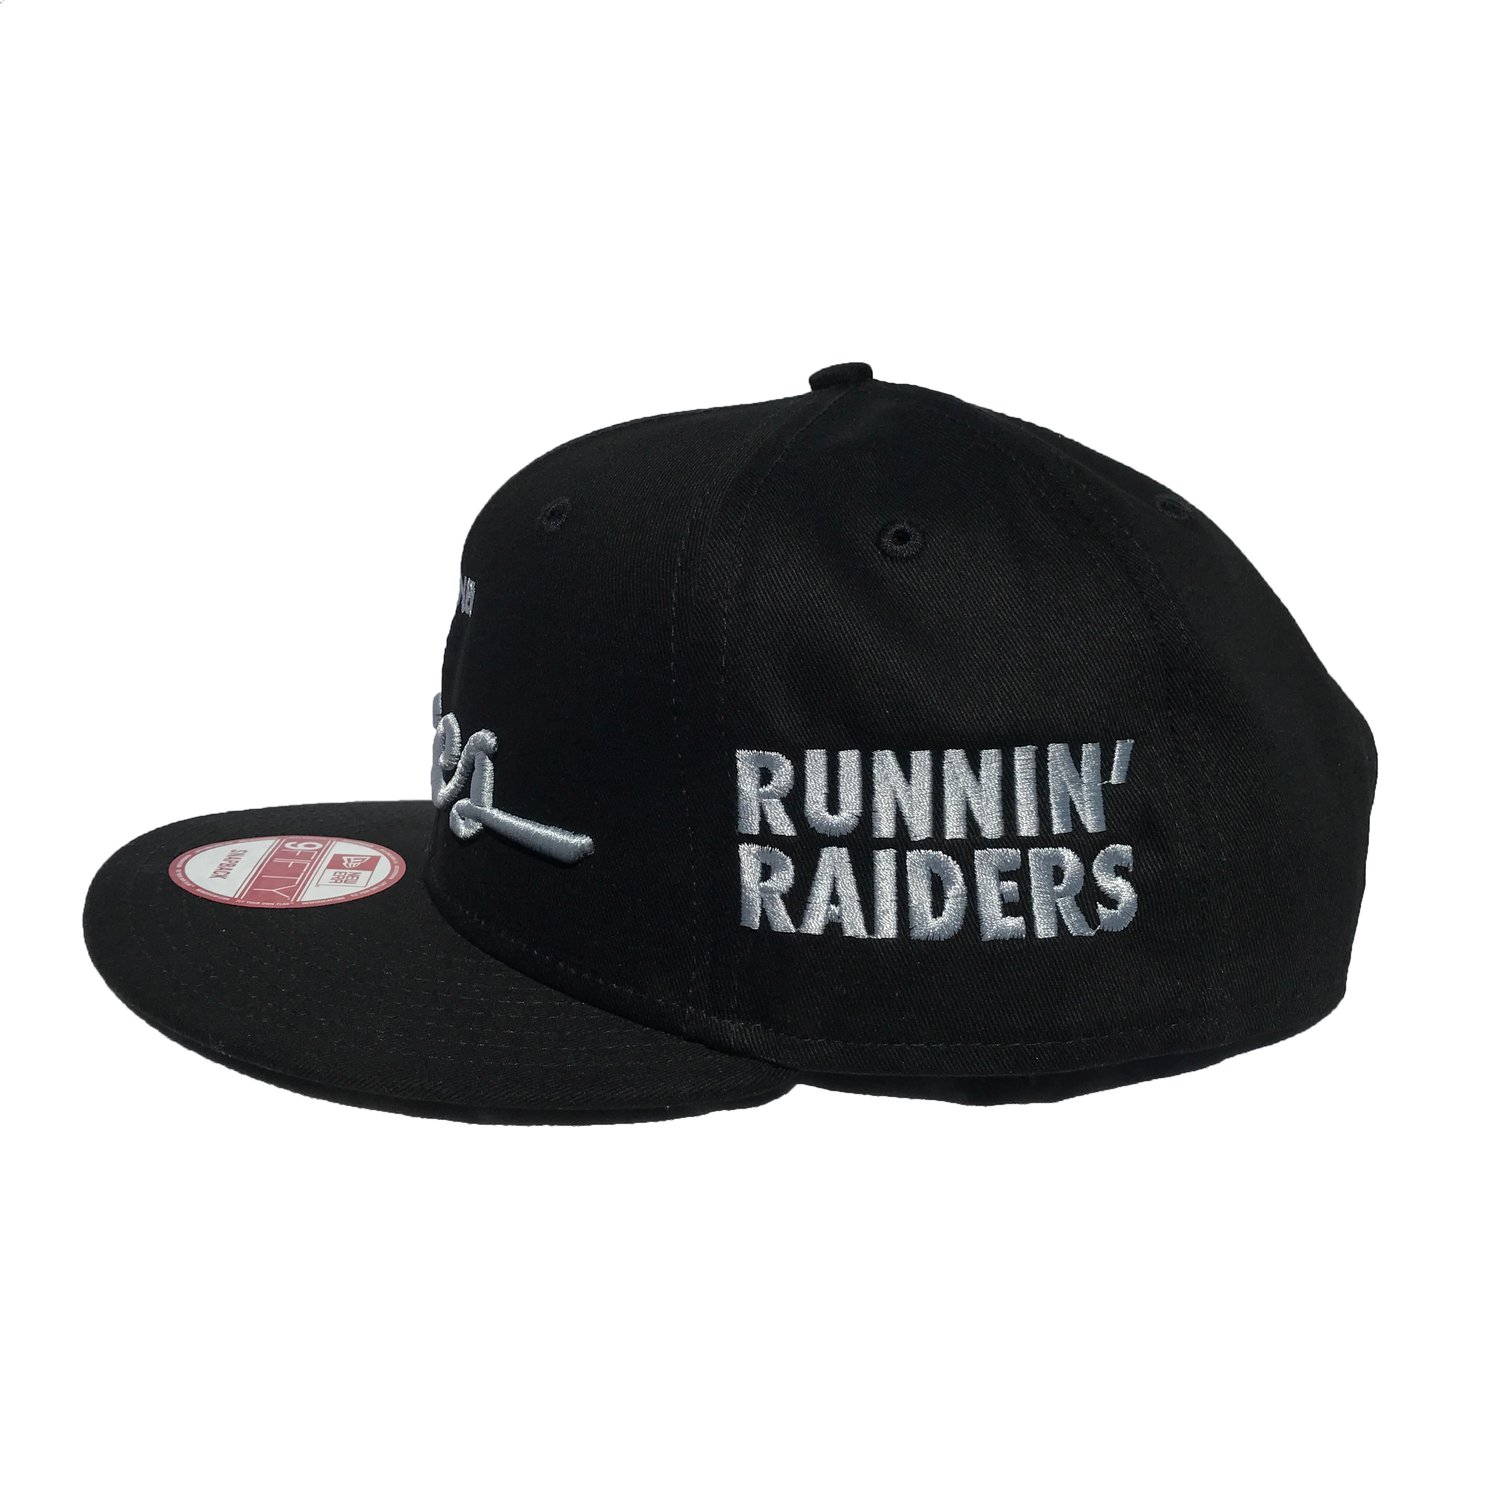 Image of Runnin' Raiders 1st Rounders Snapback - BLK/SLVR 